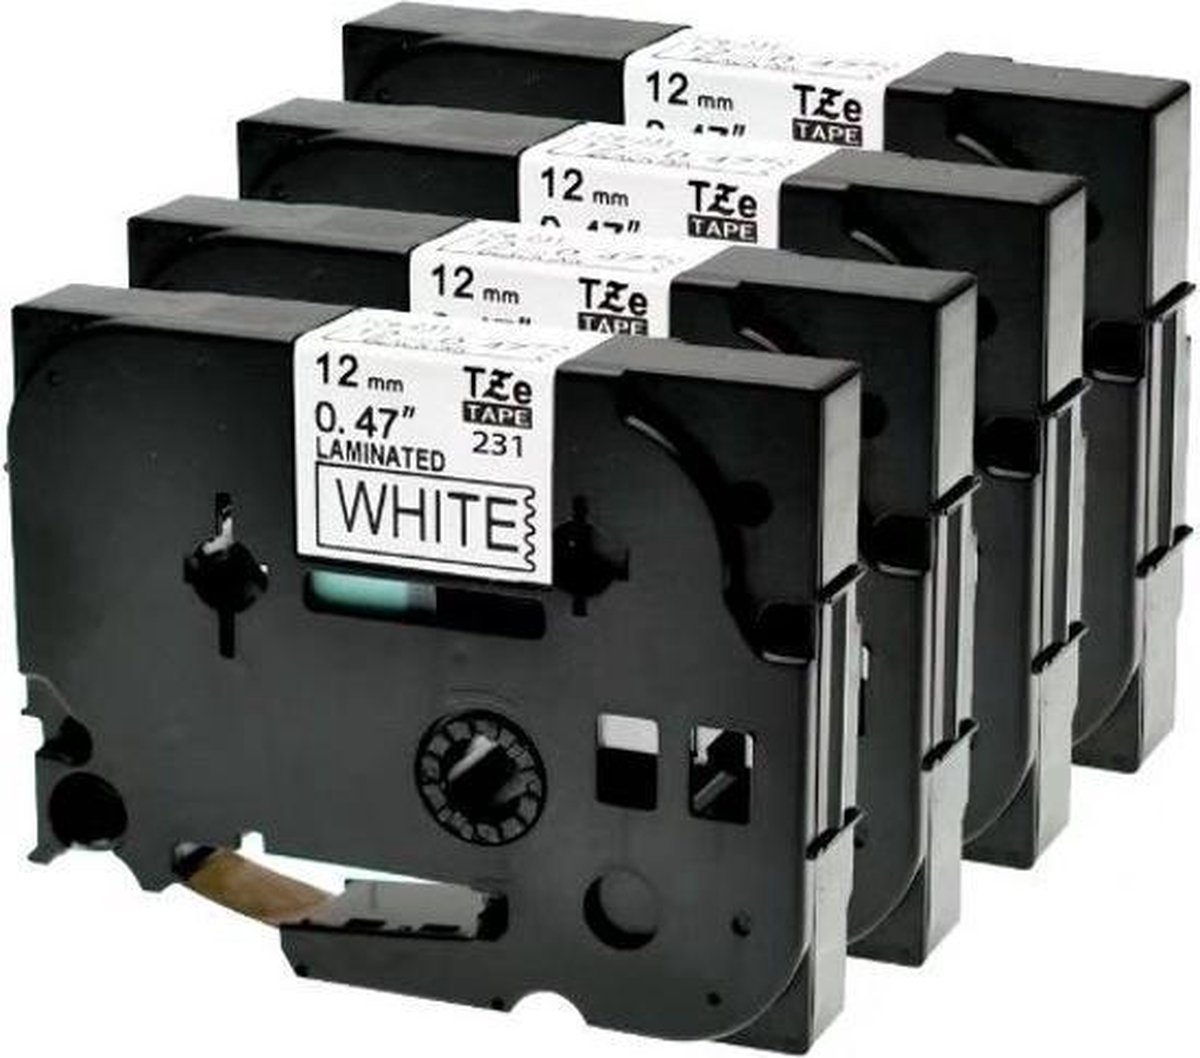 TZe231 Label Tapel Compatible 4x TZ231 Zwart op Wit 12mm X 8m voor Brother P-Touch PT-1000 GL-H100 GL-H105 GL-200 PT-1080 PTE-550WVP PT-P700 PT-H300 Label Printer